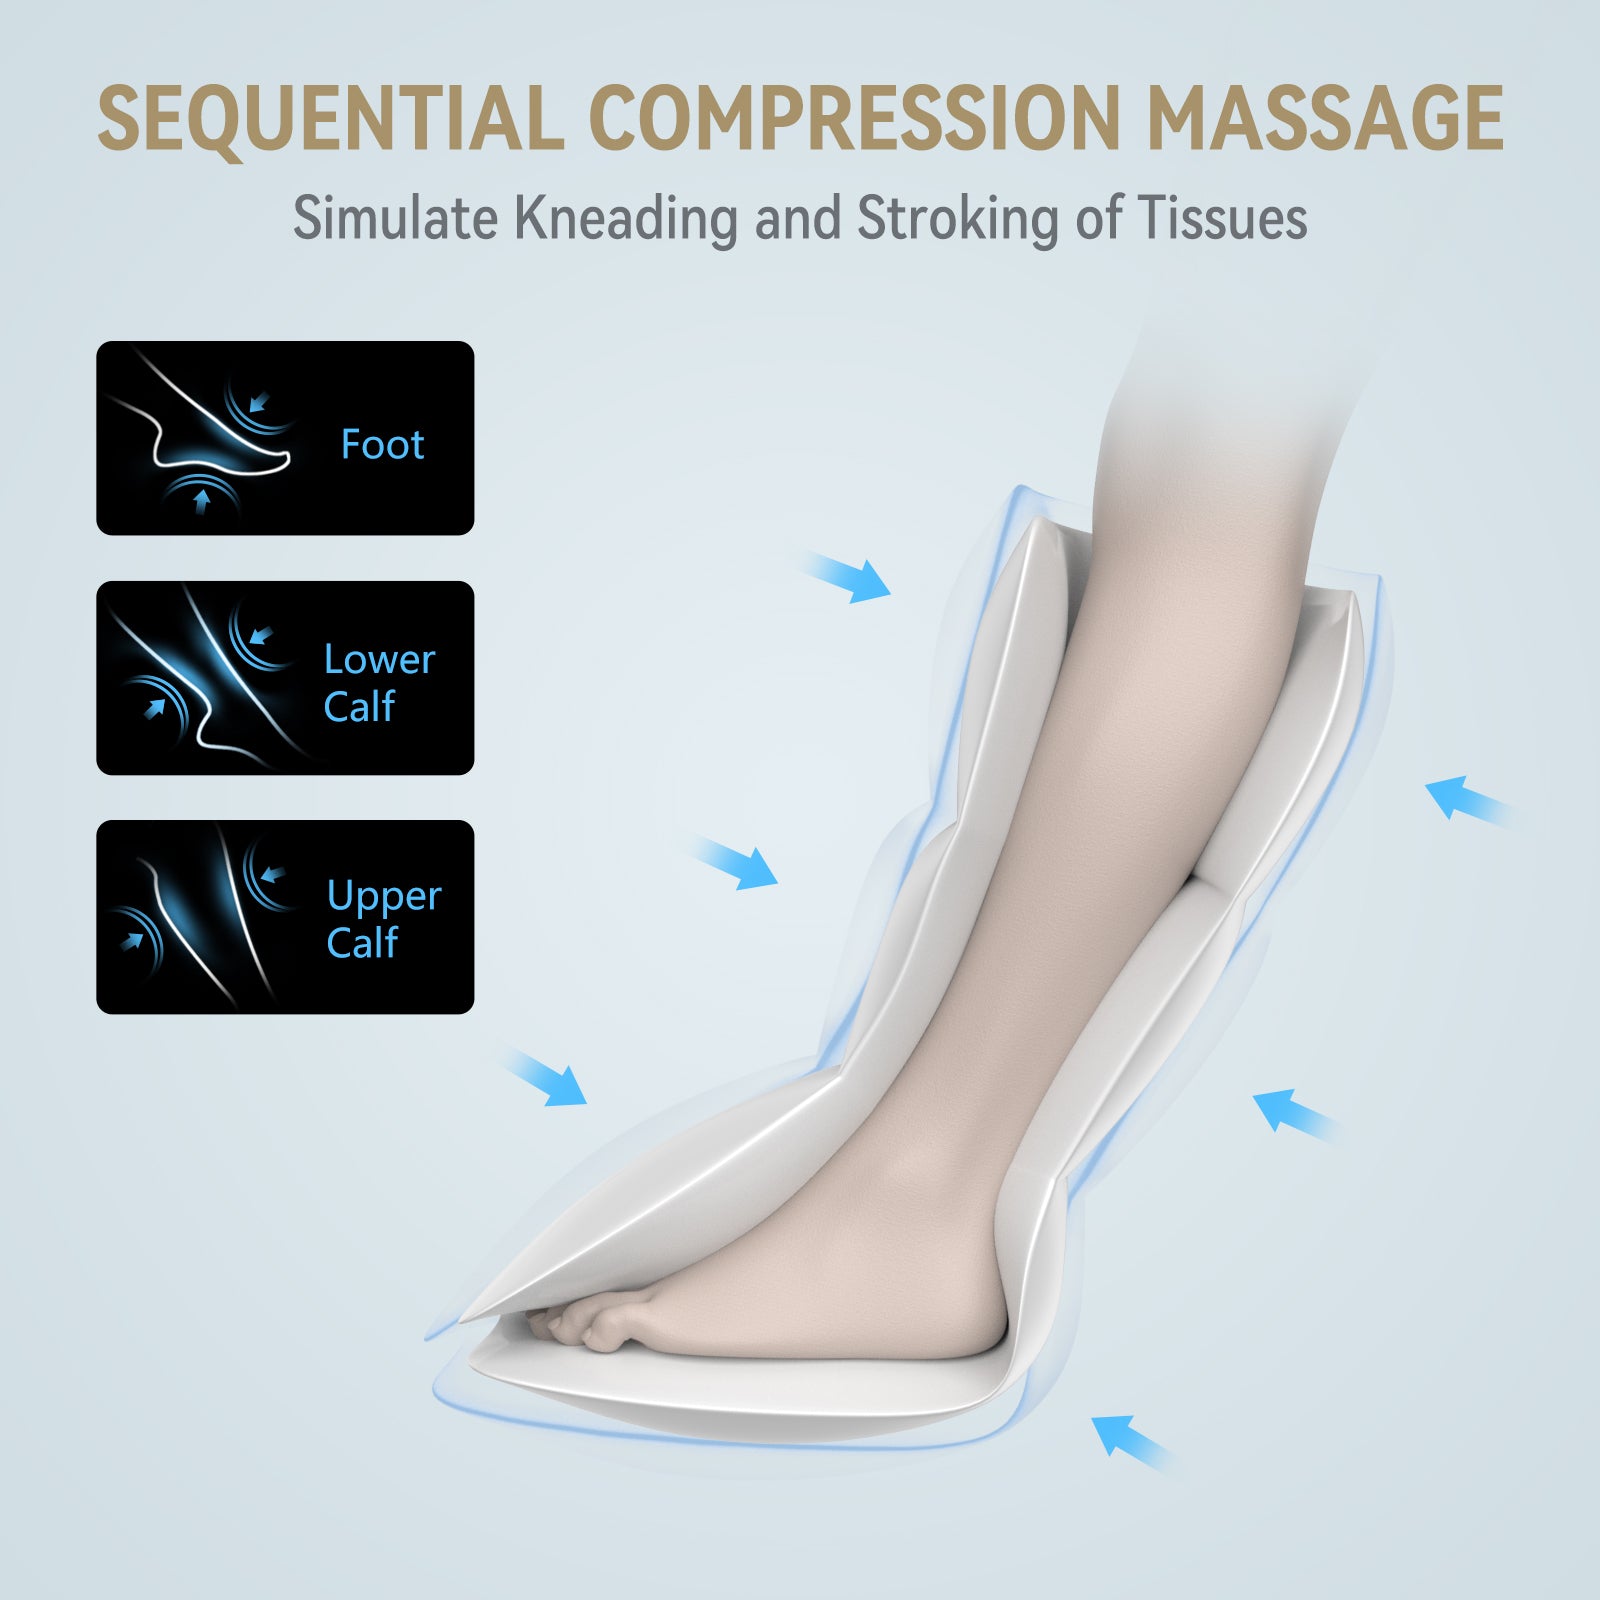 FT-059A - Cordless & Rechargeable Foot & Leg Massager